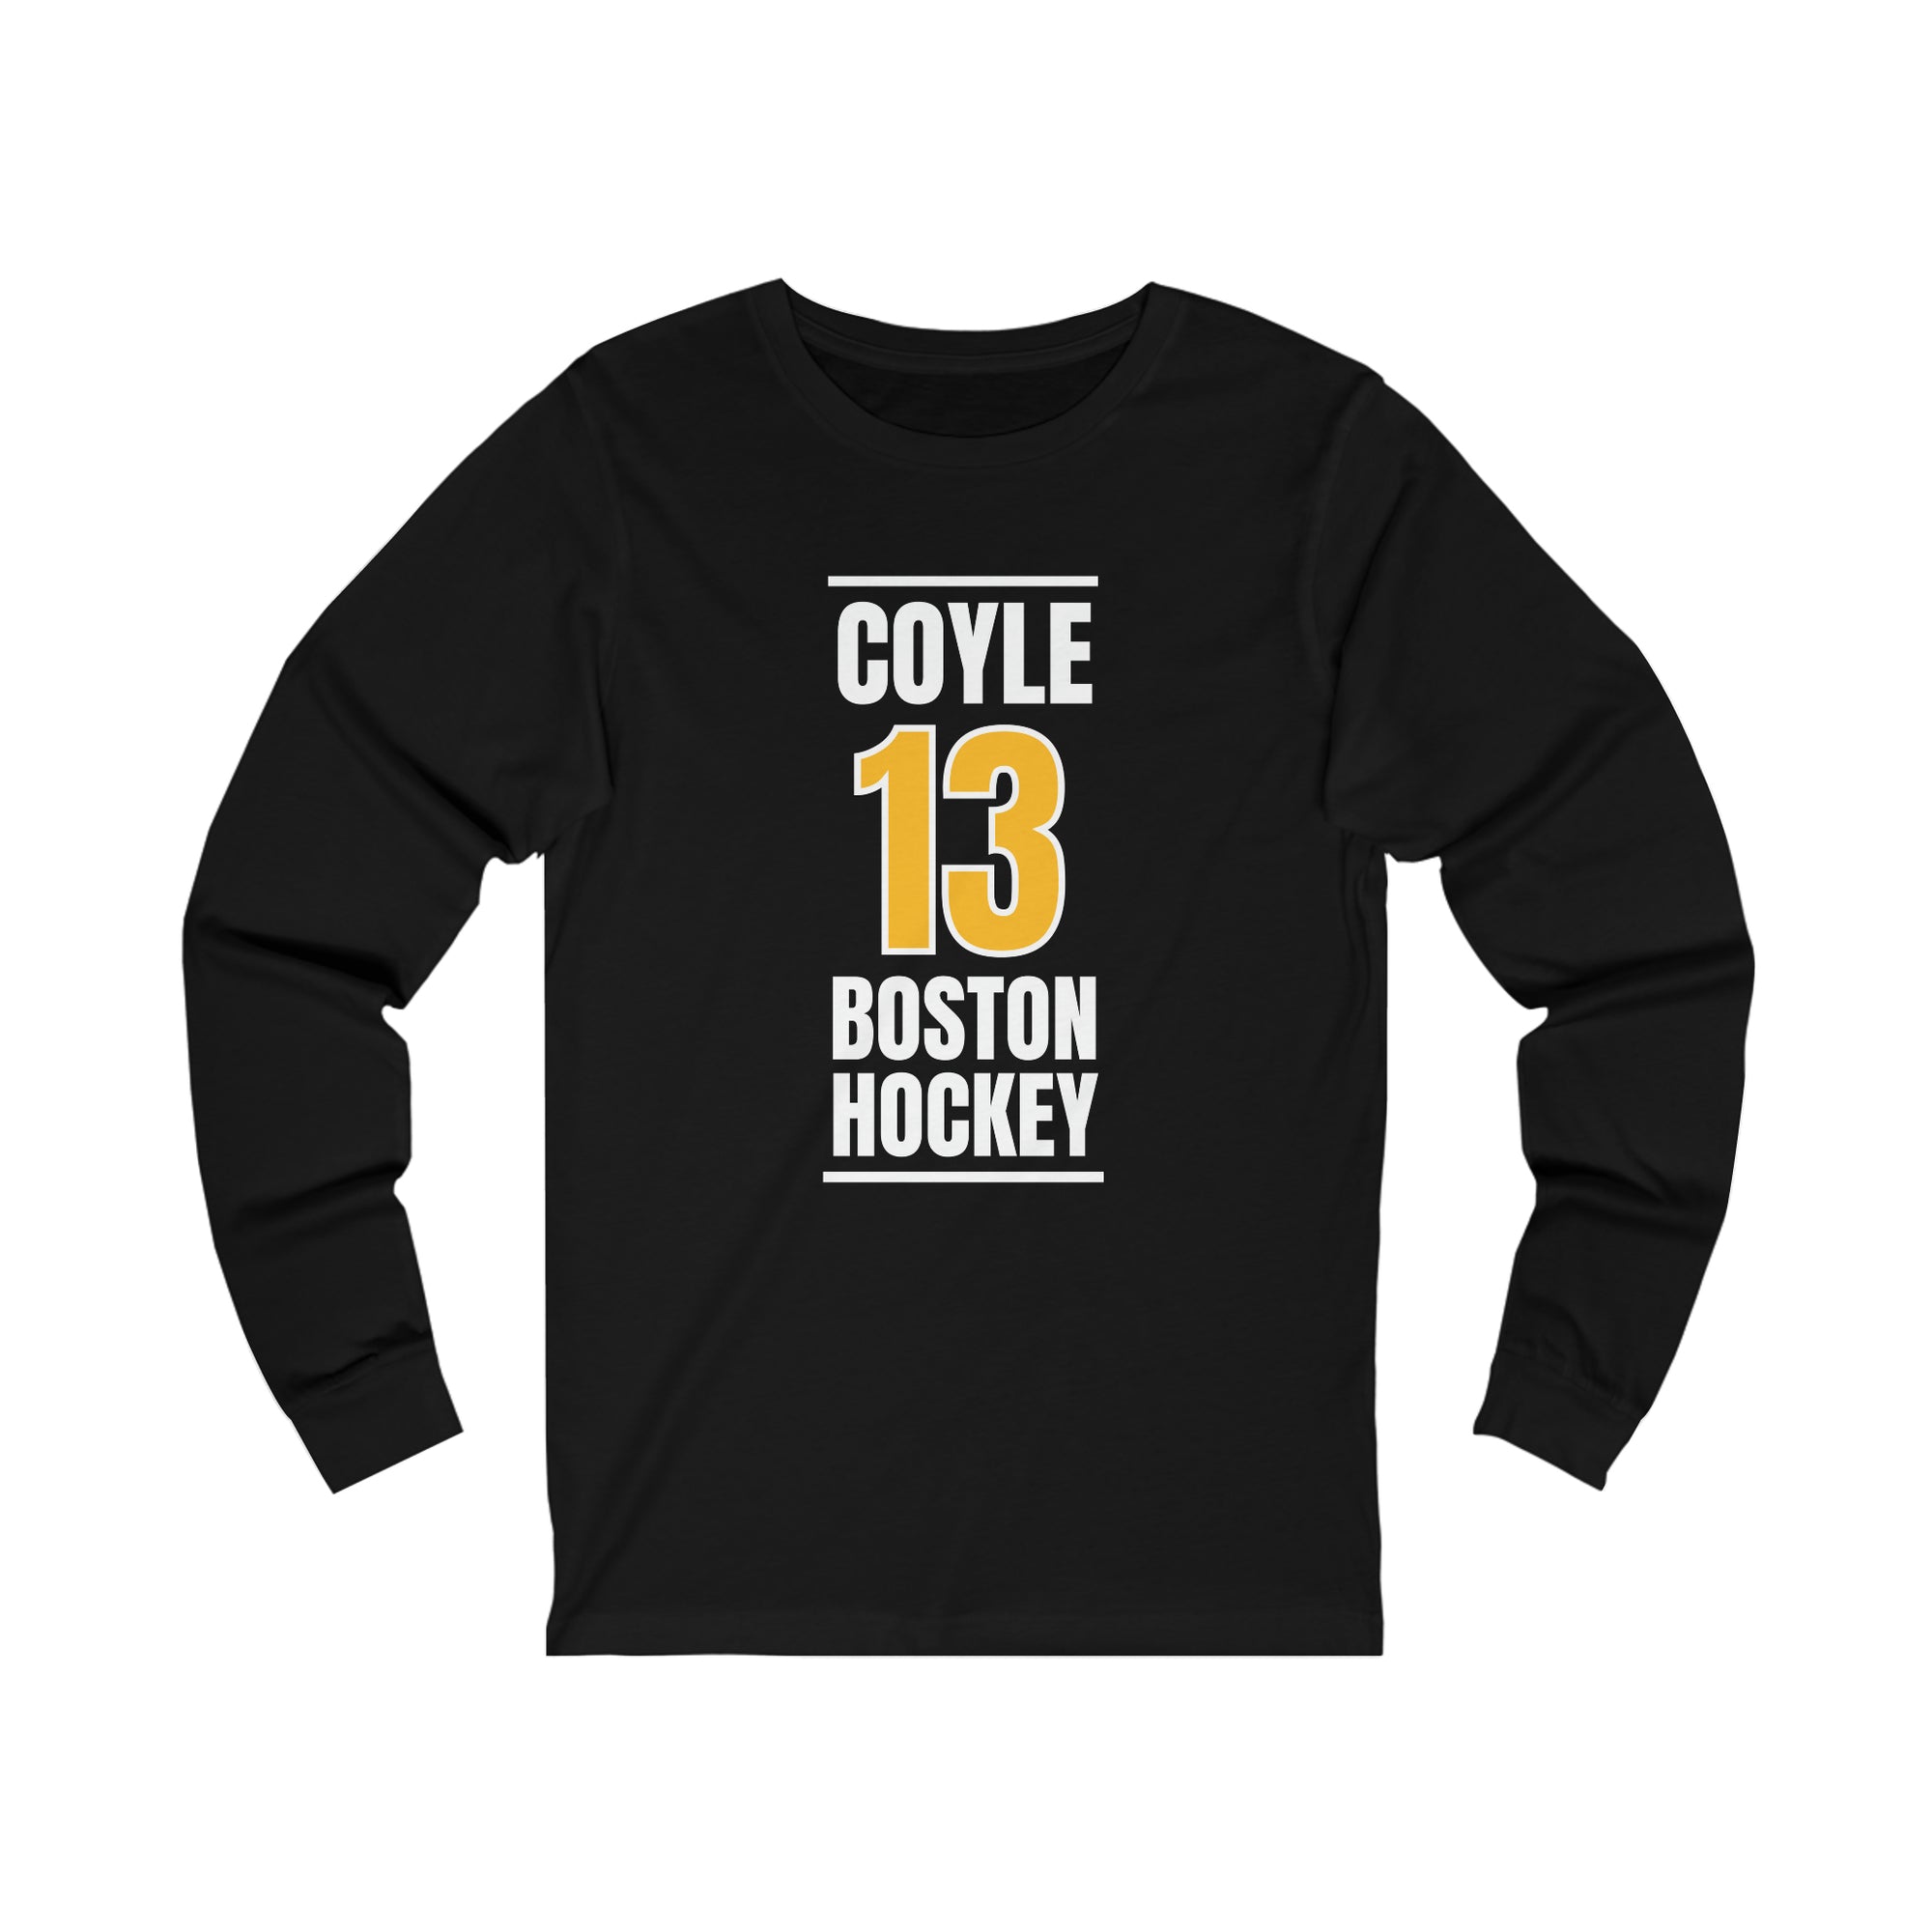 Coyle 13 Boston Hockey Gold Vertical Design Unisex Jersey Long Sleeve Shirt